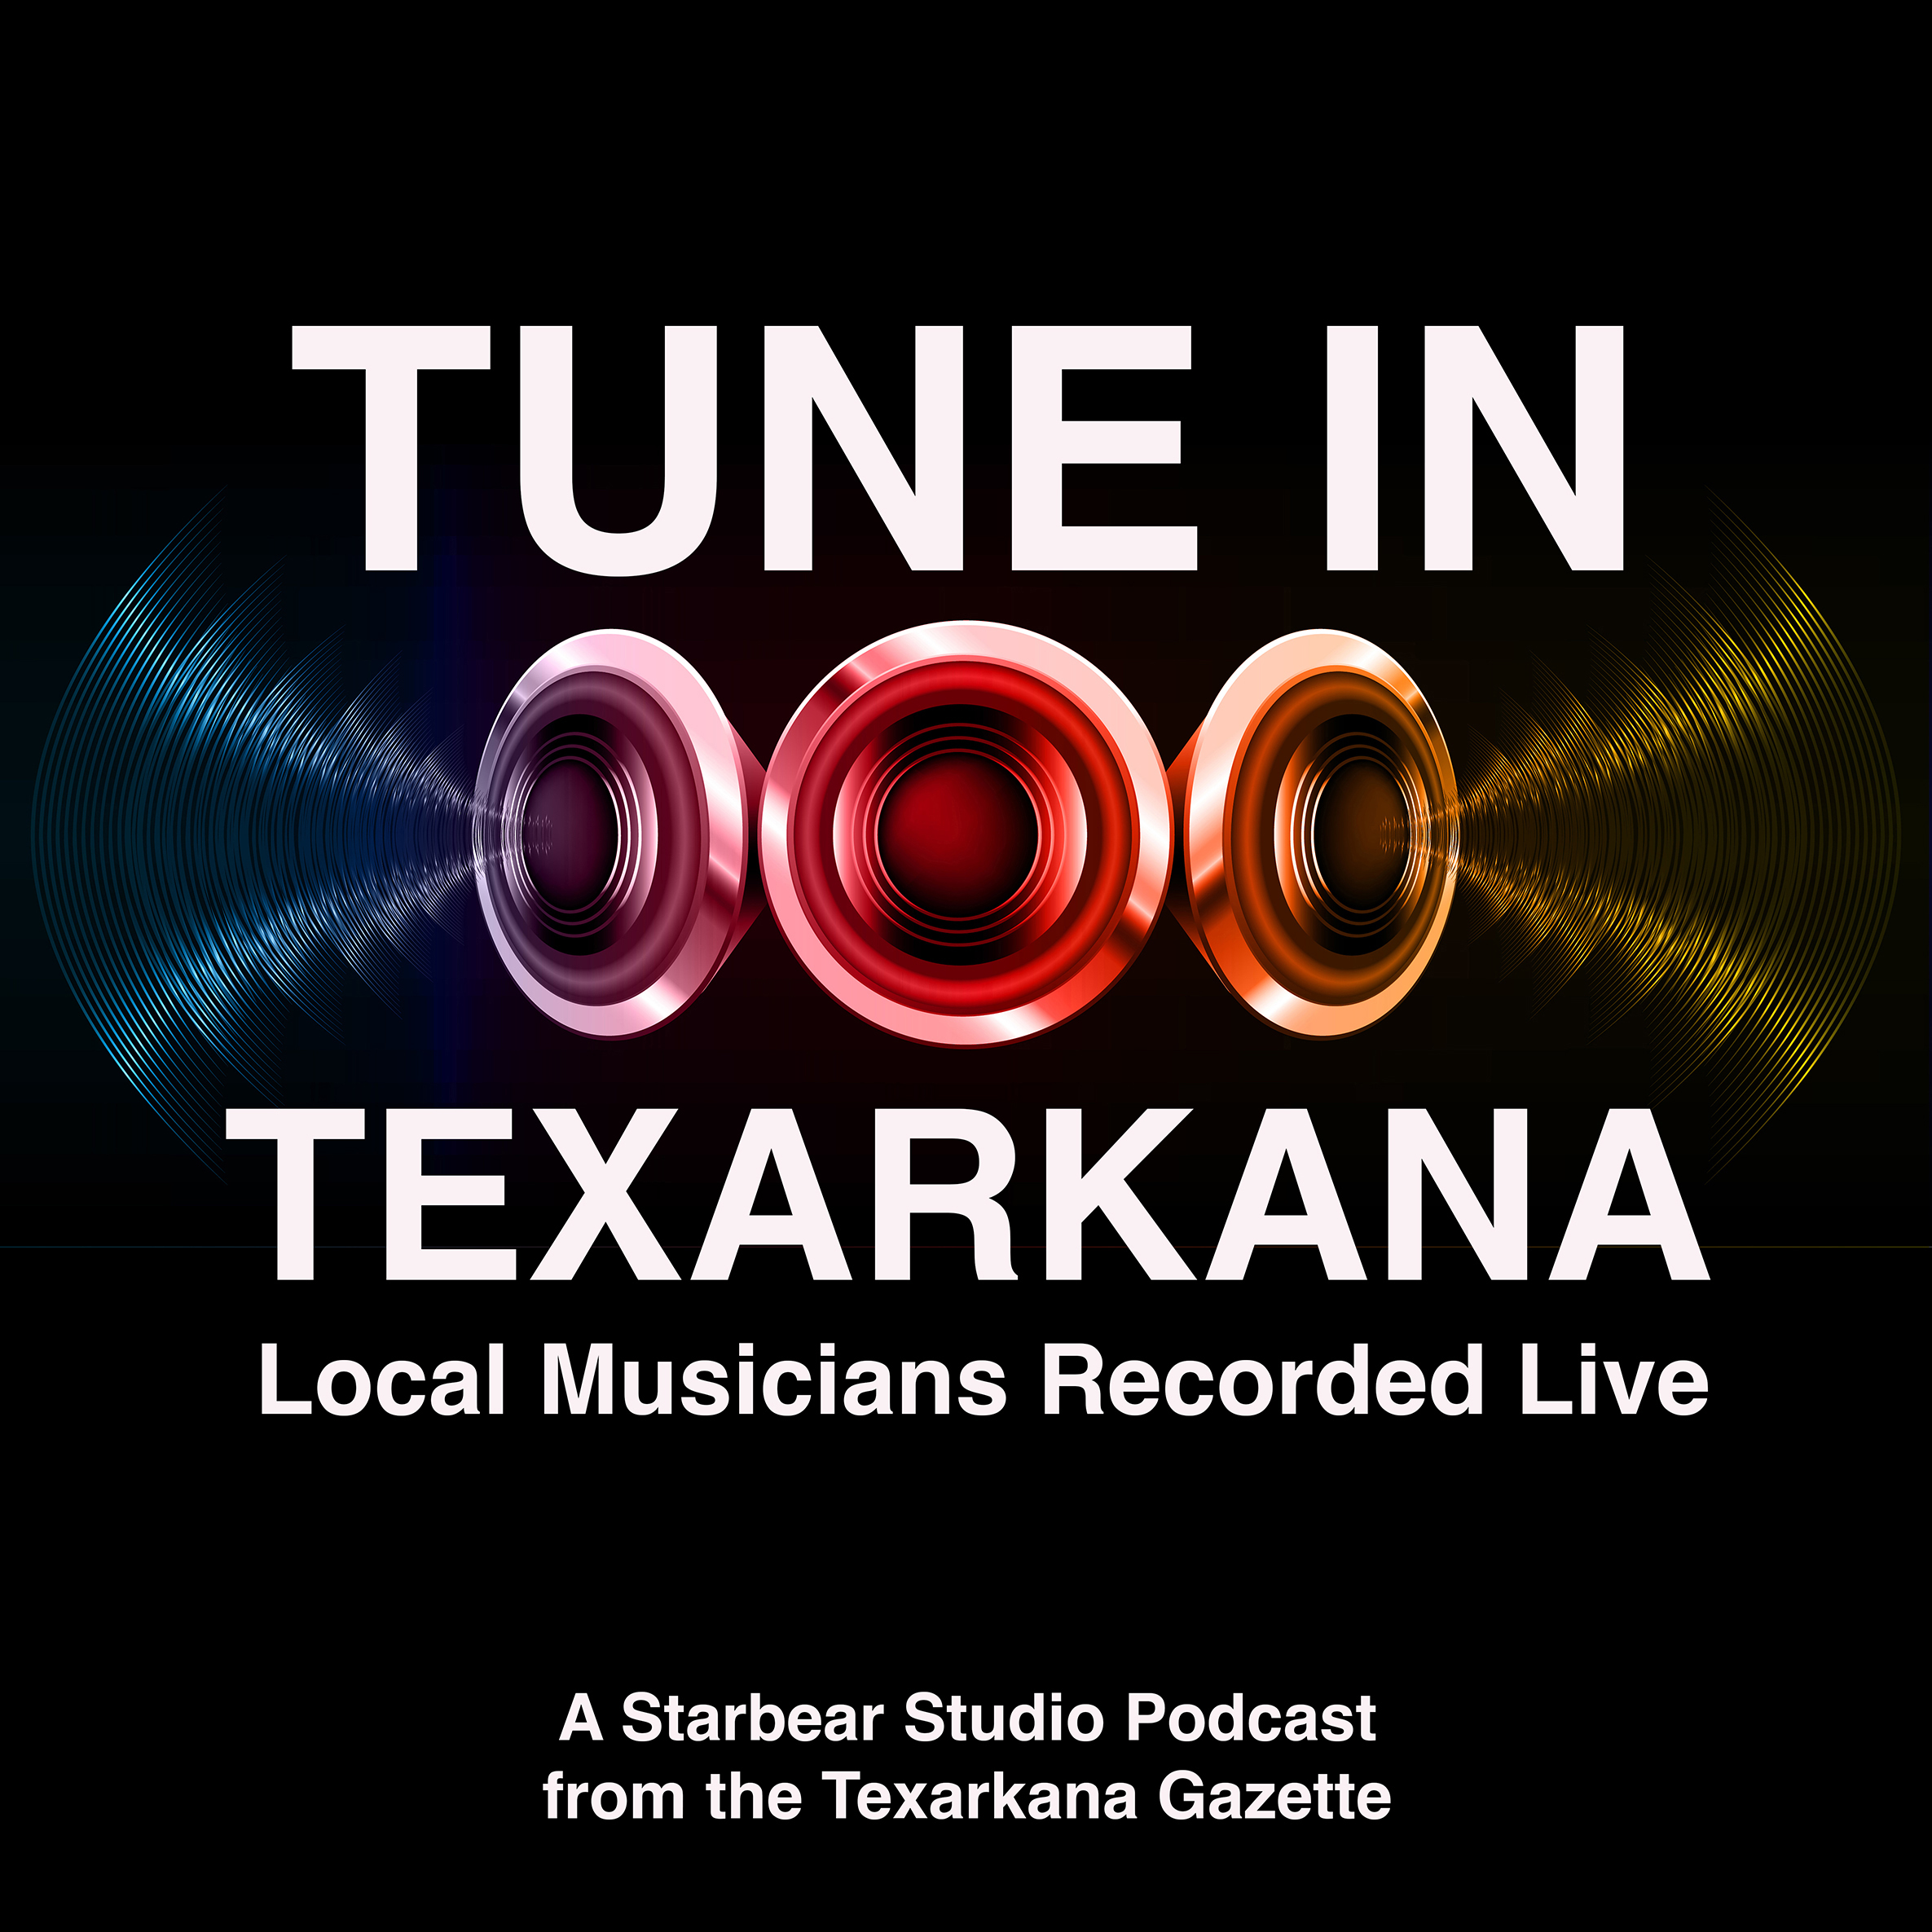 Introducing "Tune In Texarkana"